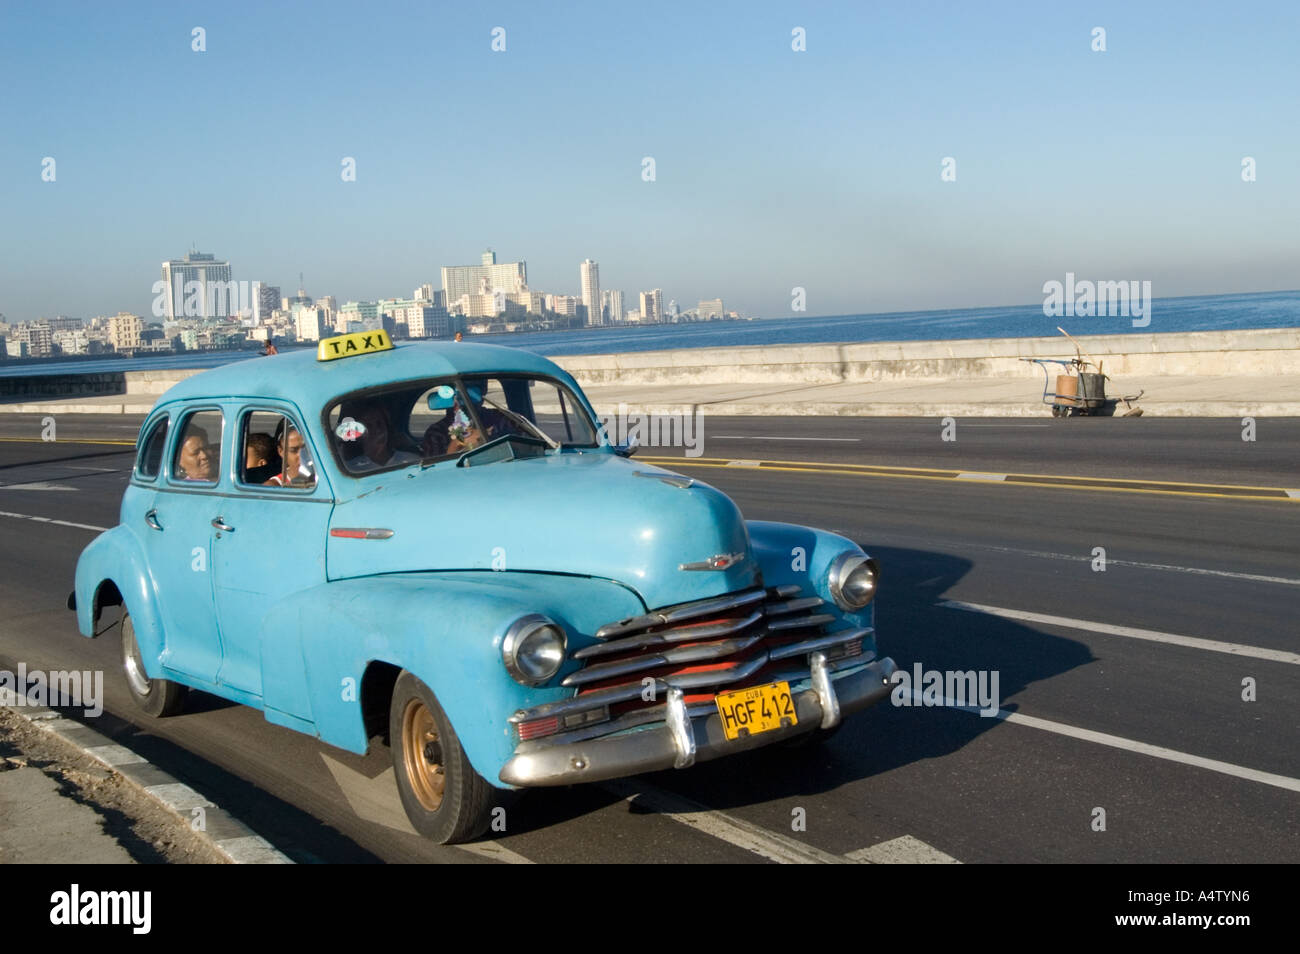 Taxi ride in a classic American car driving along El Malecon, Havana, Cuba Stock Photo